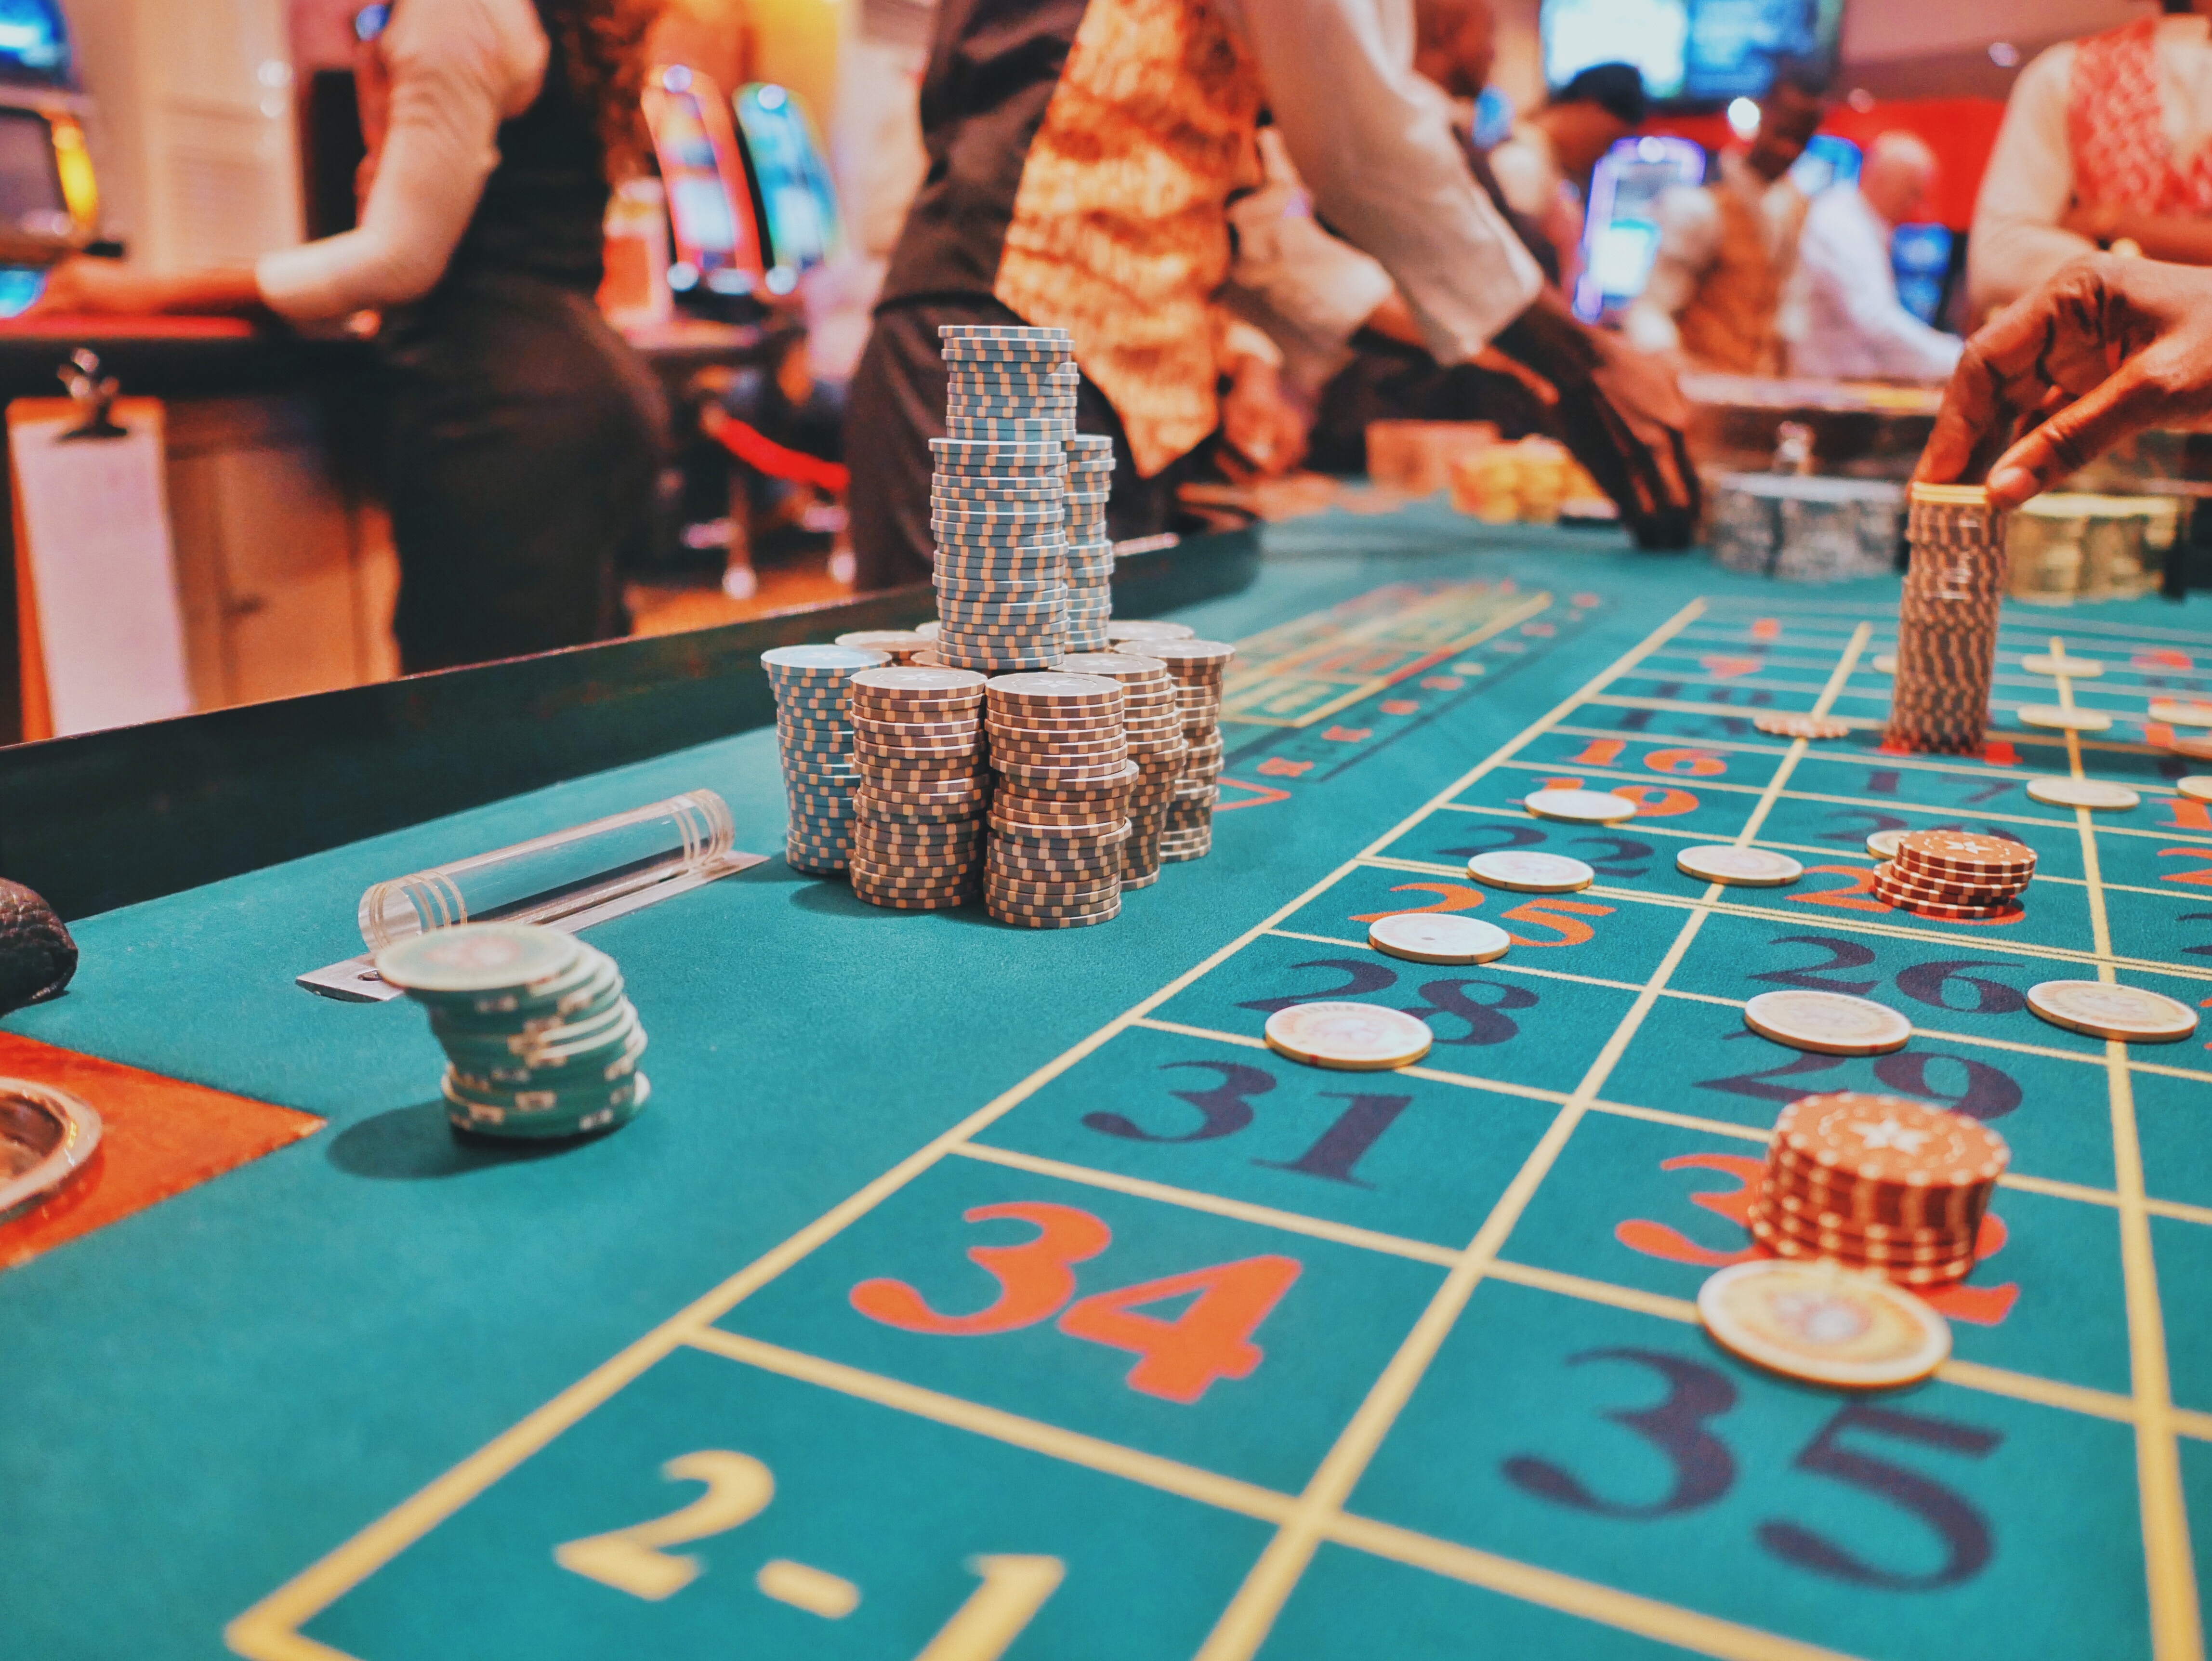 Gambling Addiction: Stats, Symptoms, and Treatment Options